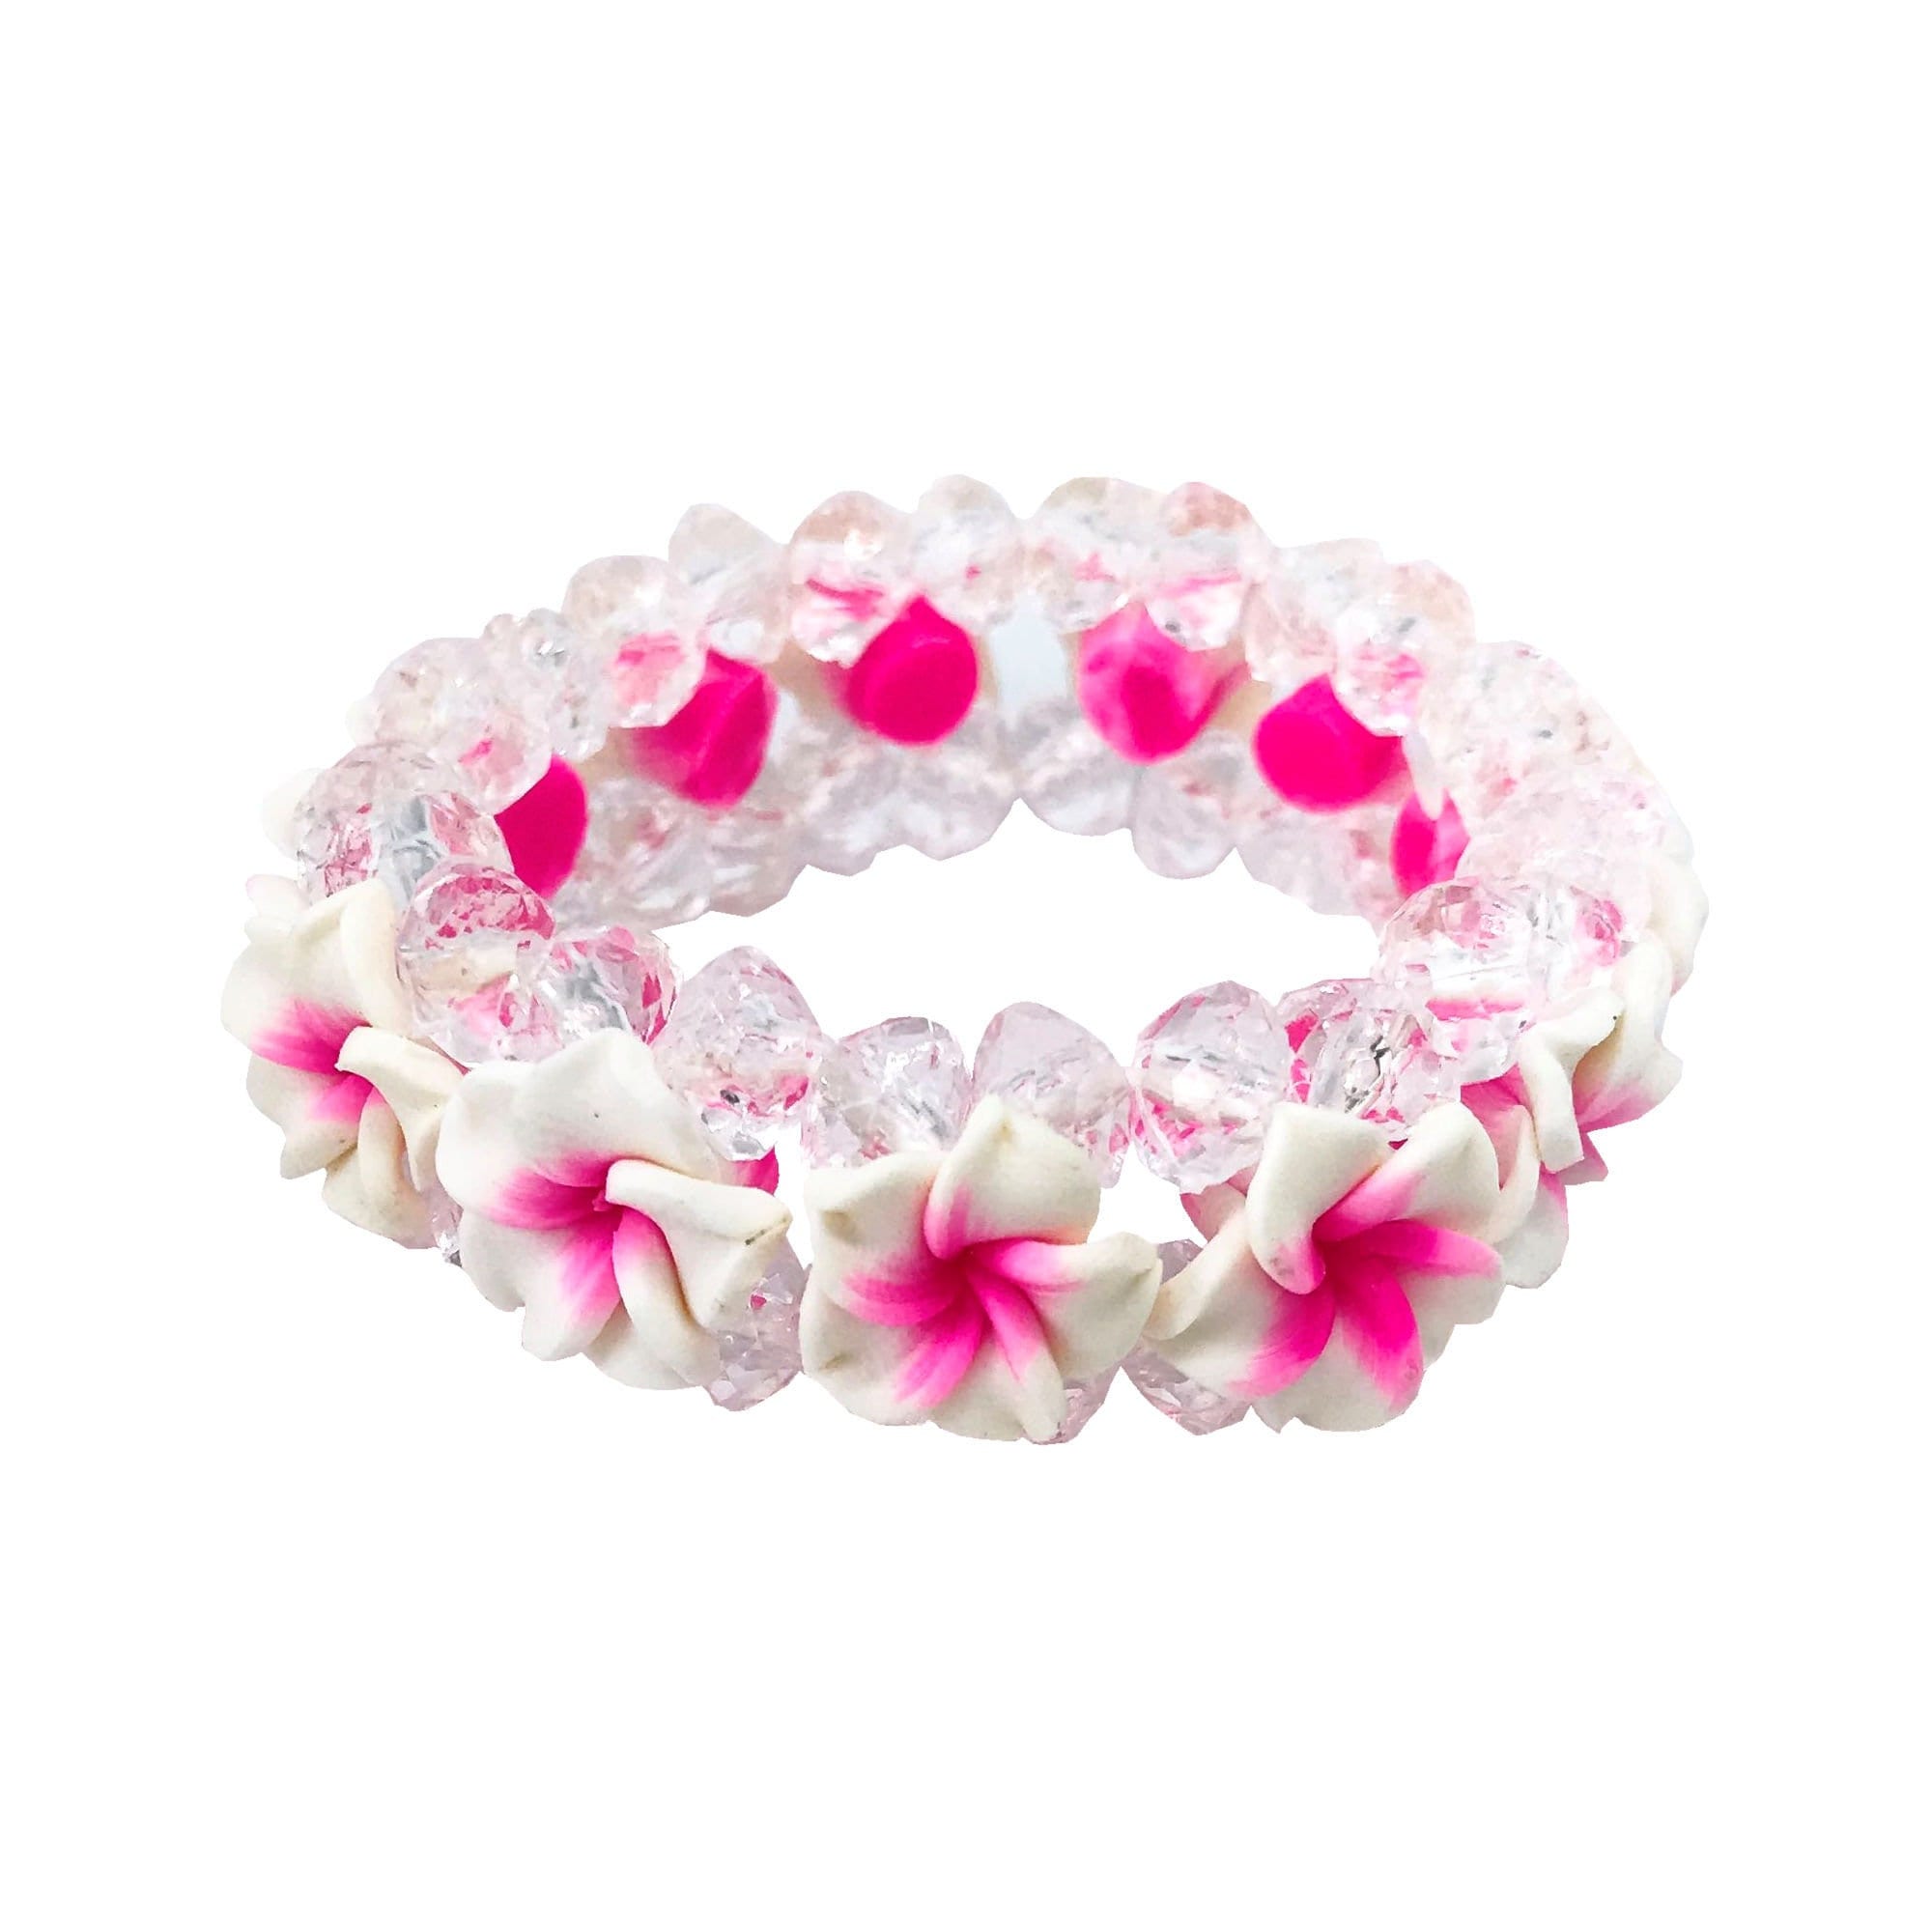 Hawaiian Jewelry Pink and White Fimo Plumeria Flower and Crystal Bead  Elastic Bracelet from Maui, Hawaii